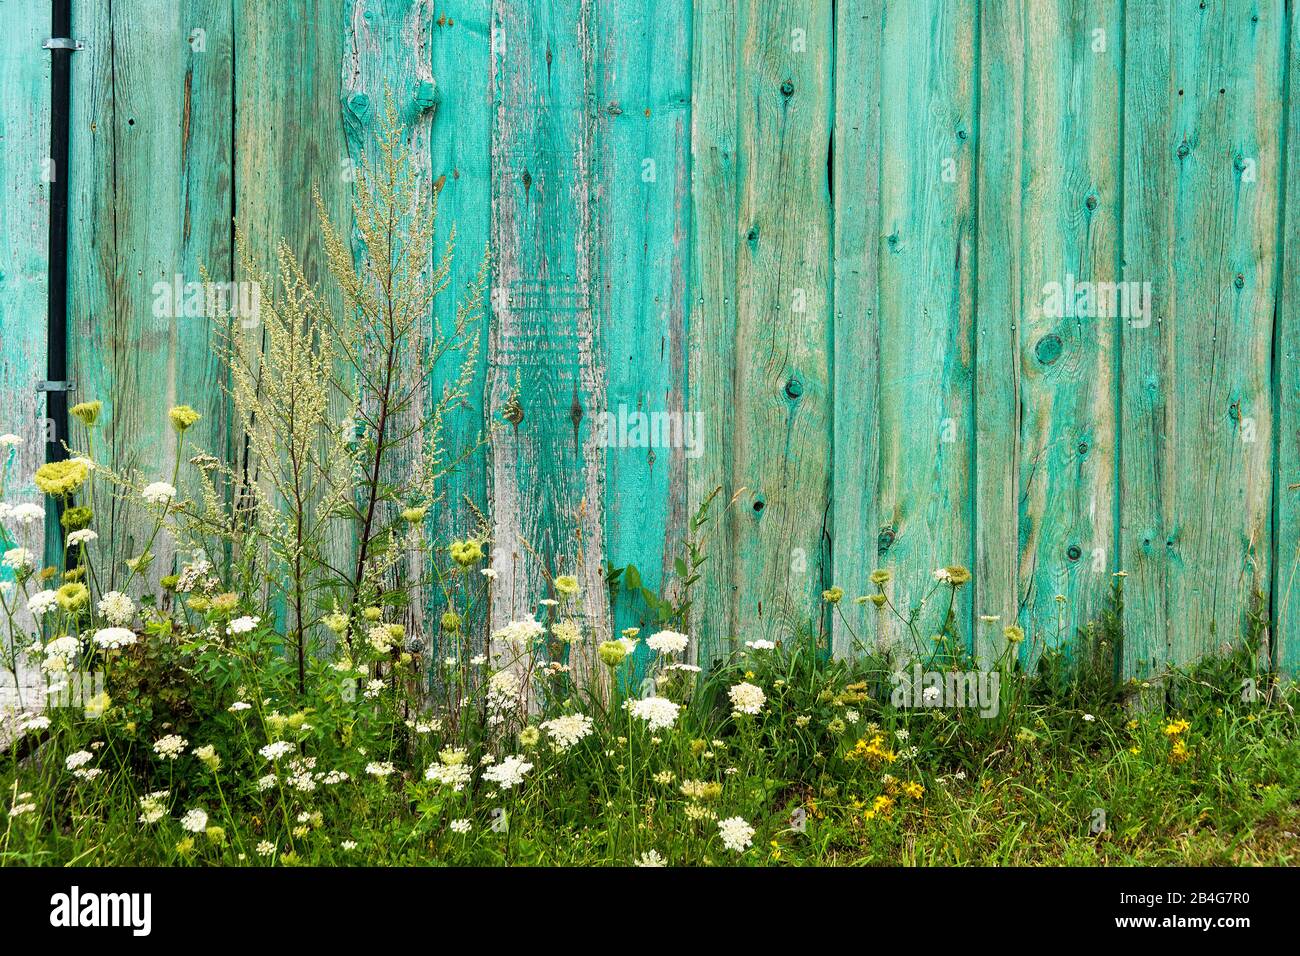 Estonia, Saaremaa, Kihelkonna, woodsheds, wildflowers Stock Photo